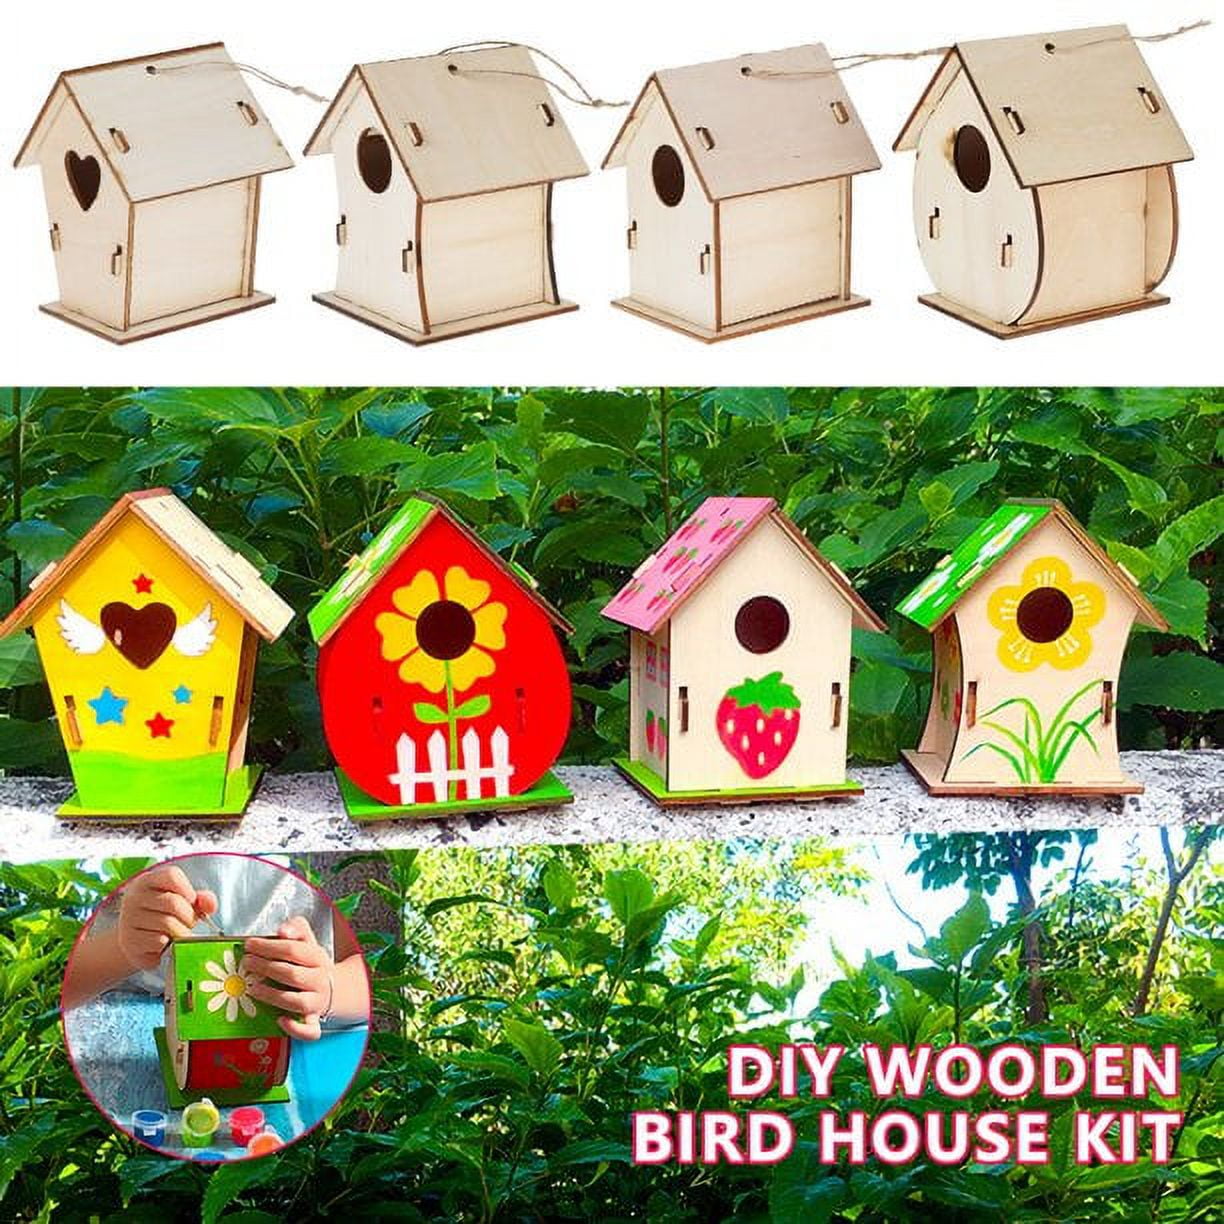 Orrhomi Crafts for Kids Ages 4-8, Bird House Kit, 4-Pack DIY